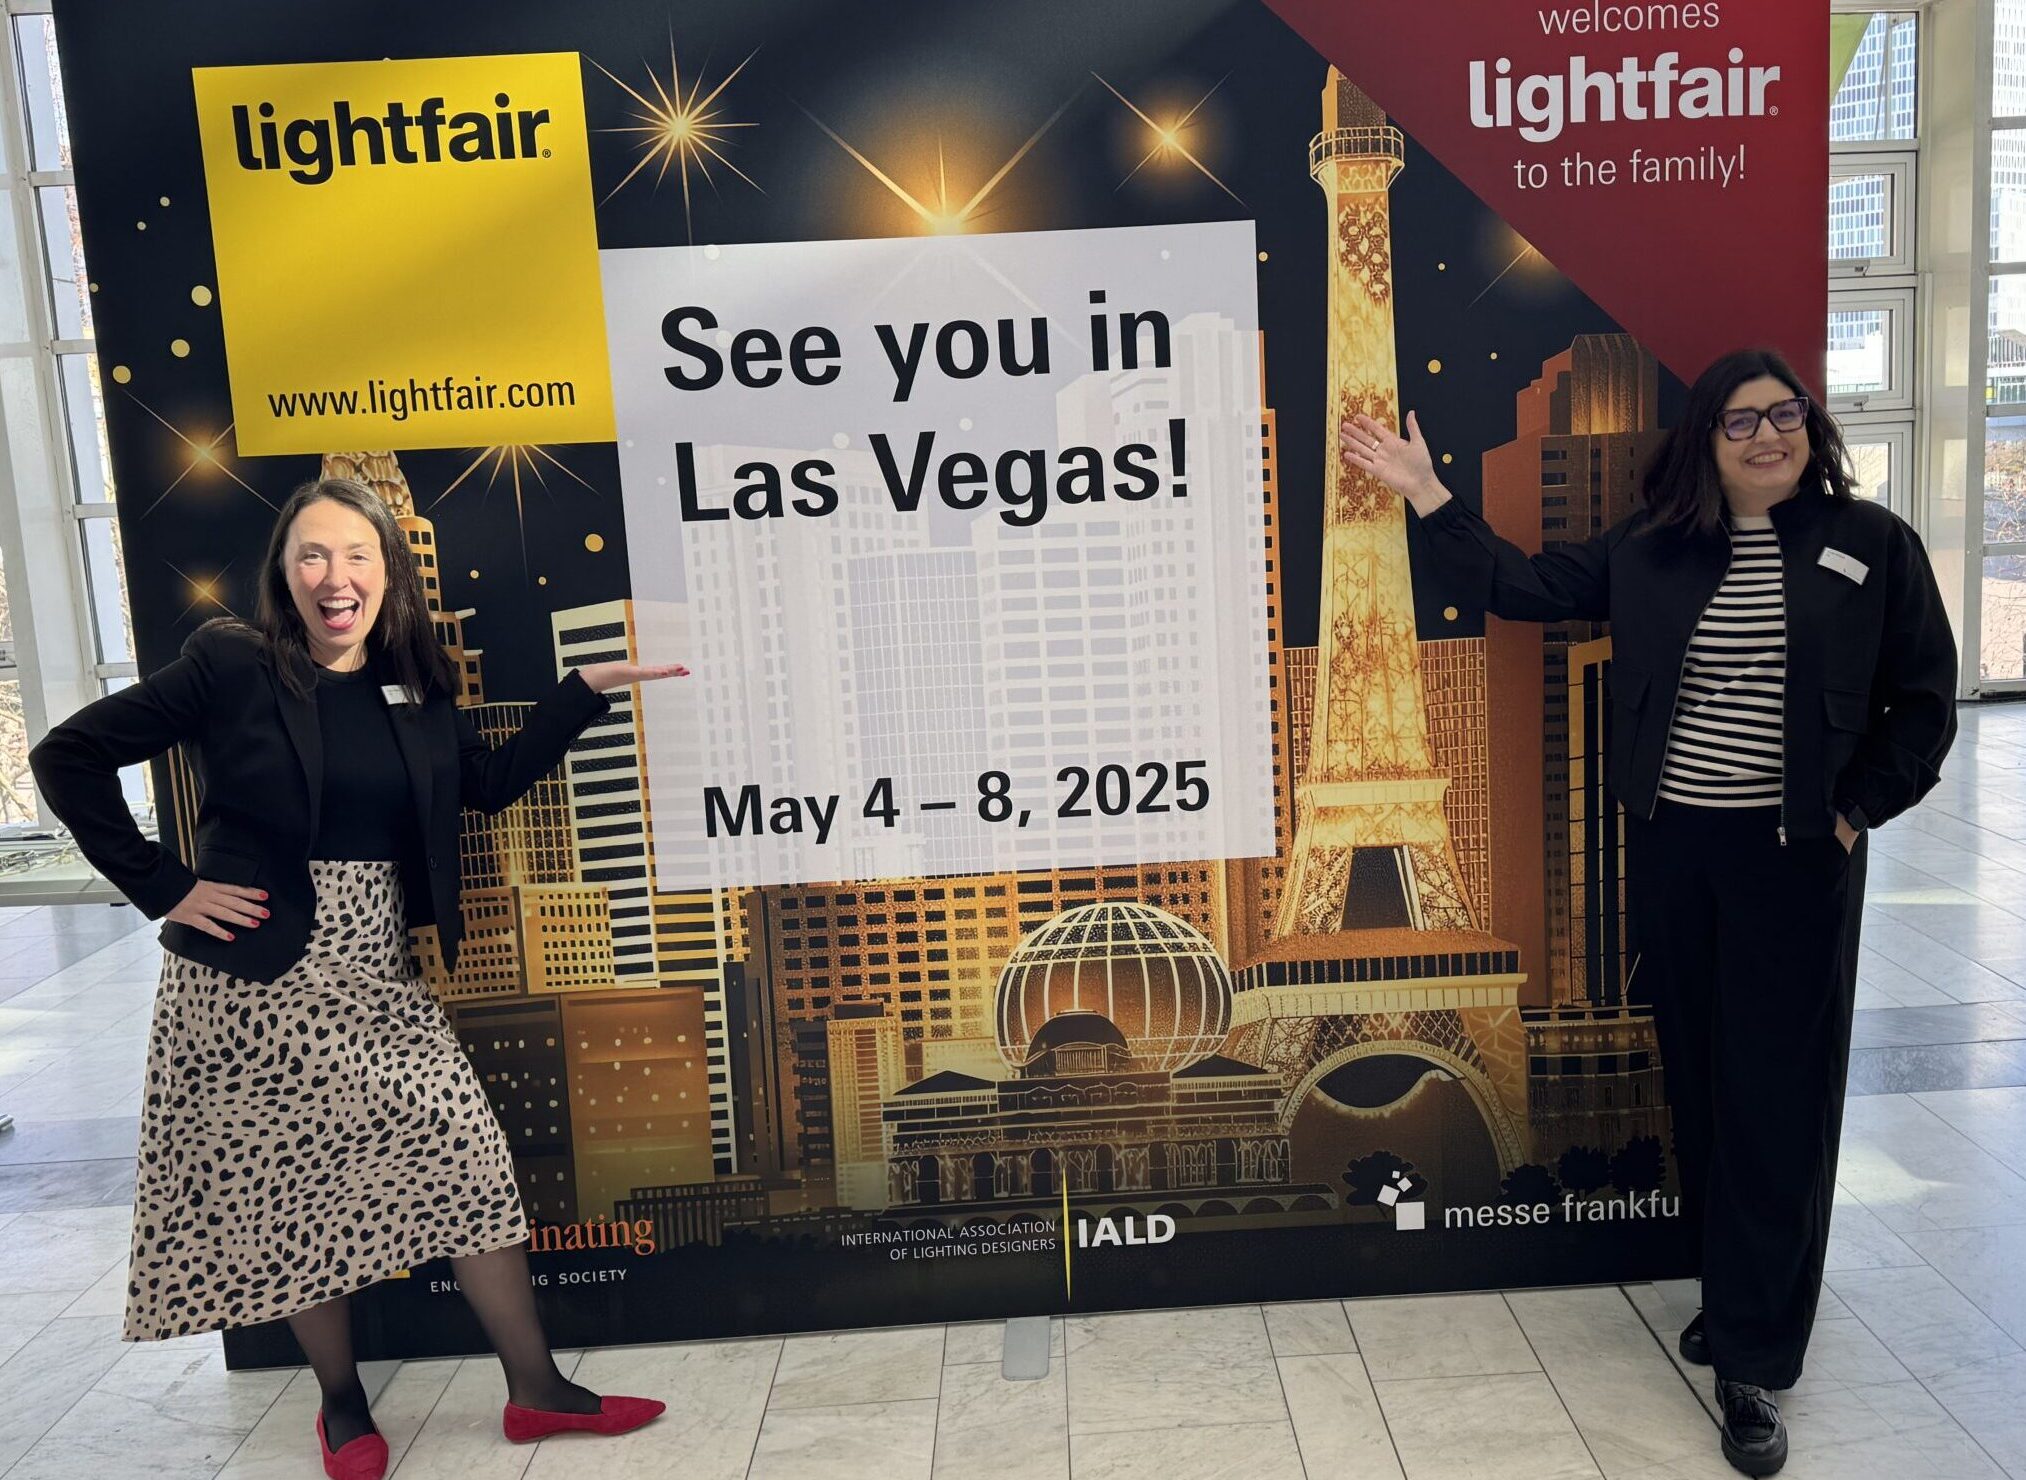 Julie Nickel & Kristy Meade pose next to the LightFair 2025 sign